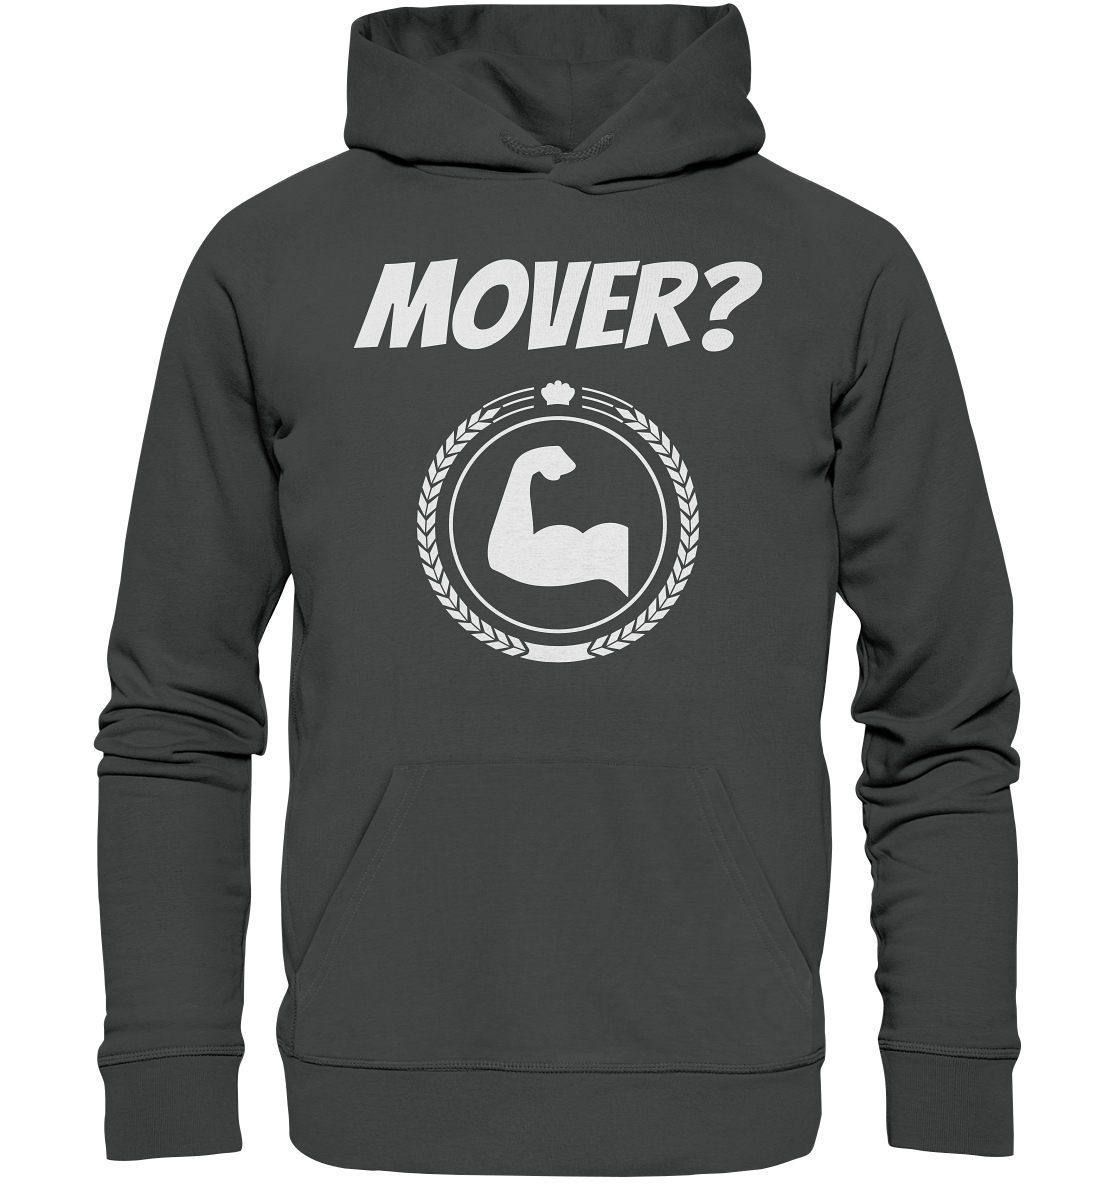 Mover? - Organic Basic Hoodie